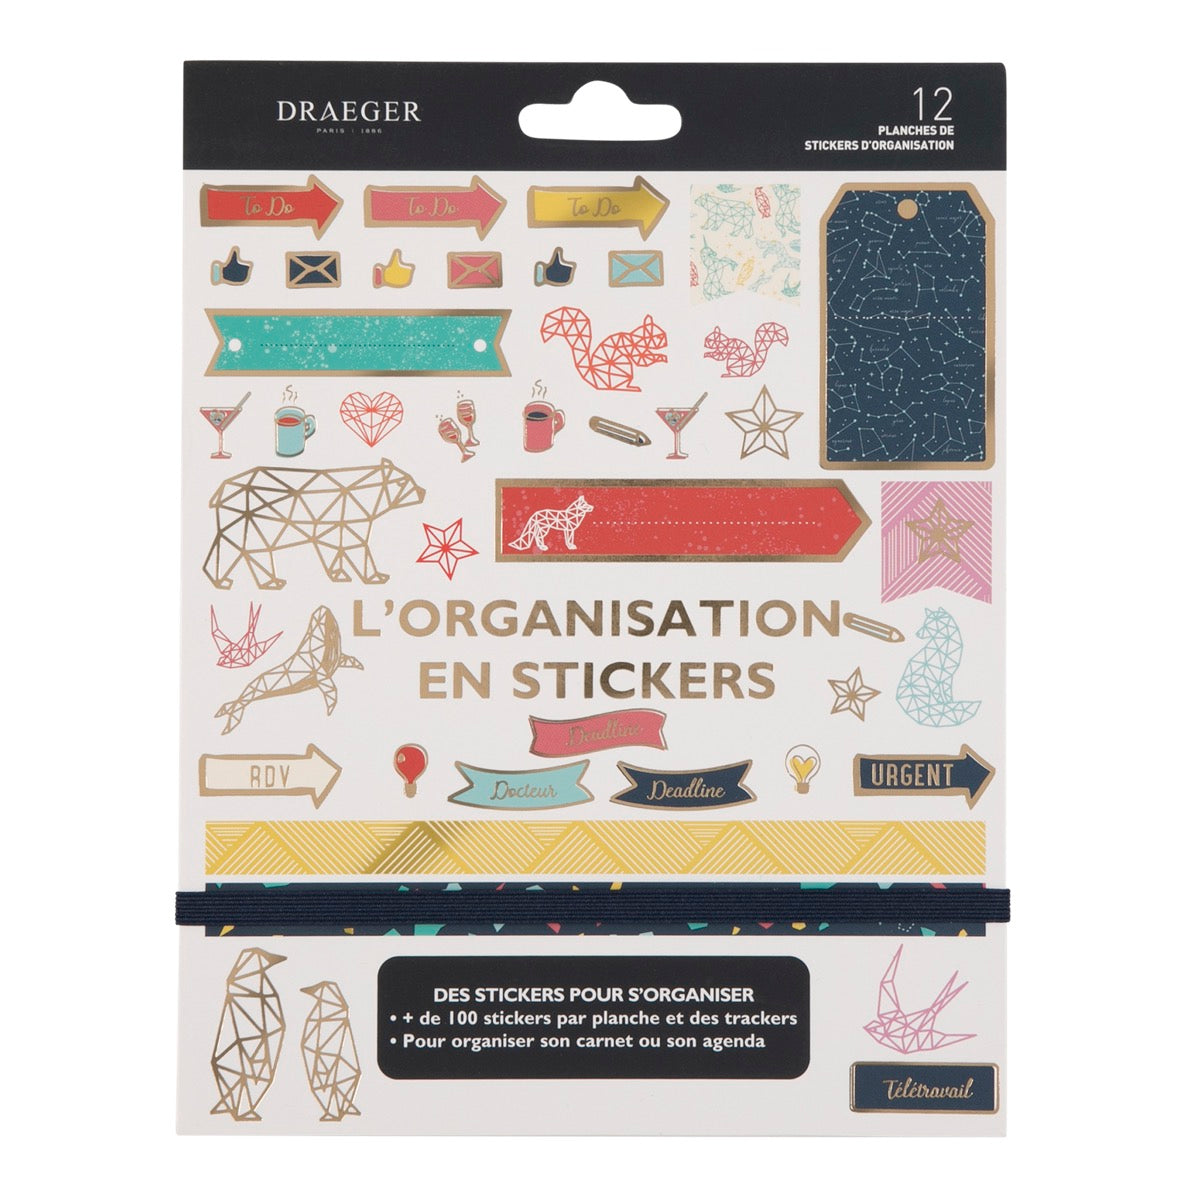 12 planches de stickers Organisation